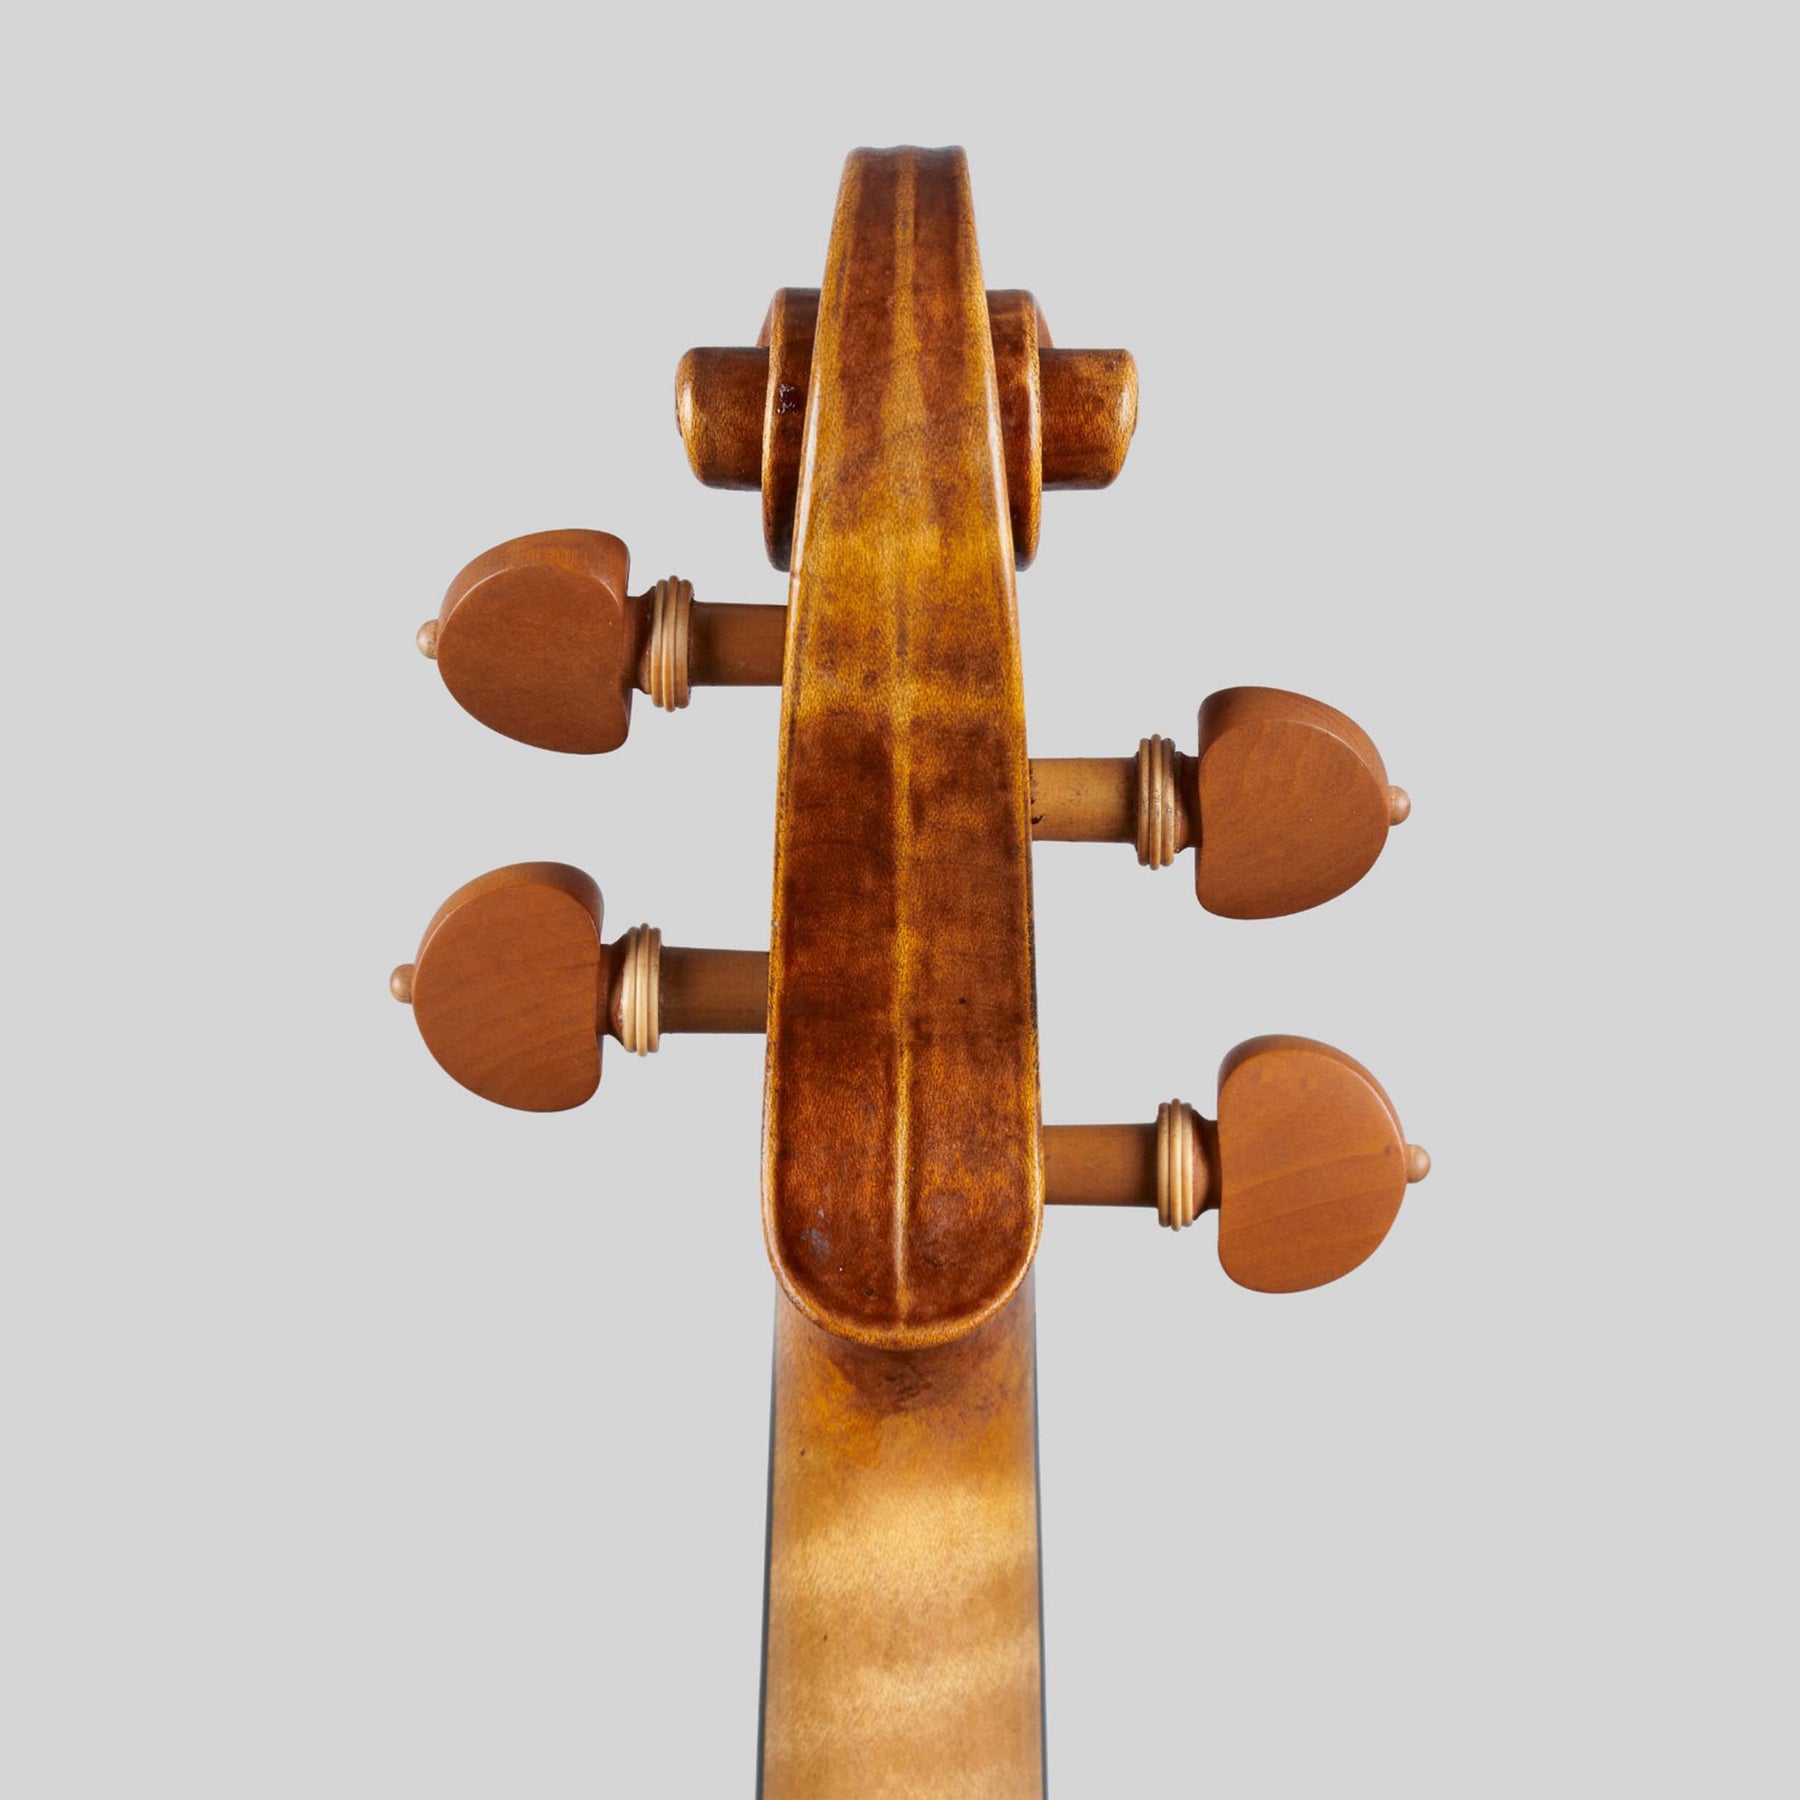 Stefano Gibertoni & Valerio Nalin, Milan "Cremonese" Stradivarius Violin 2023